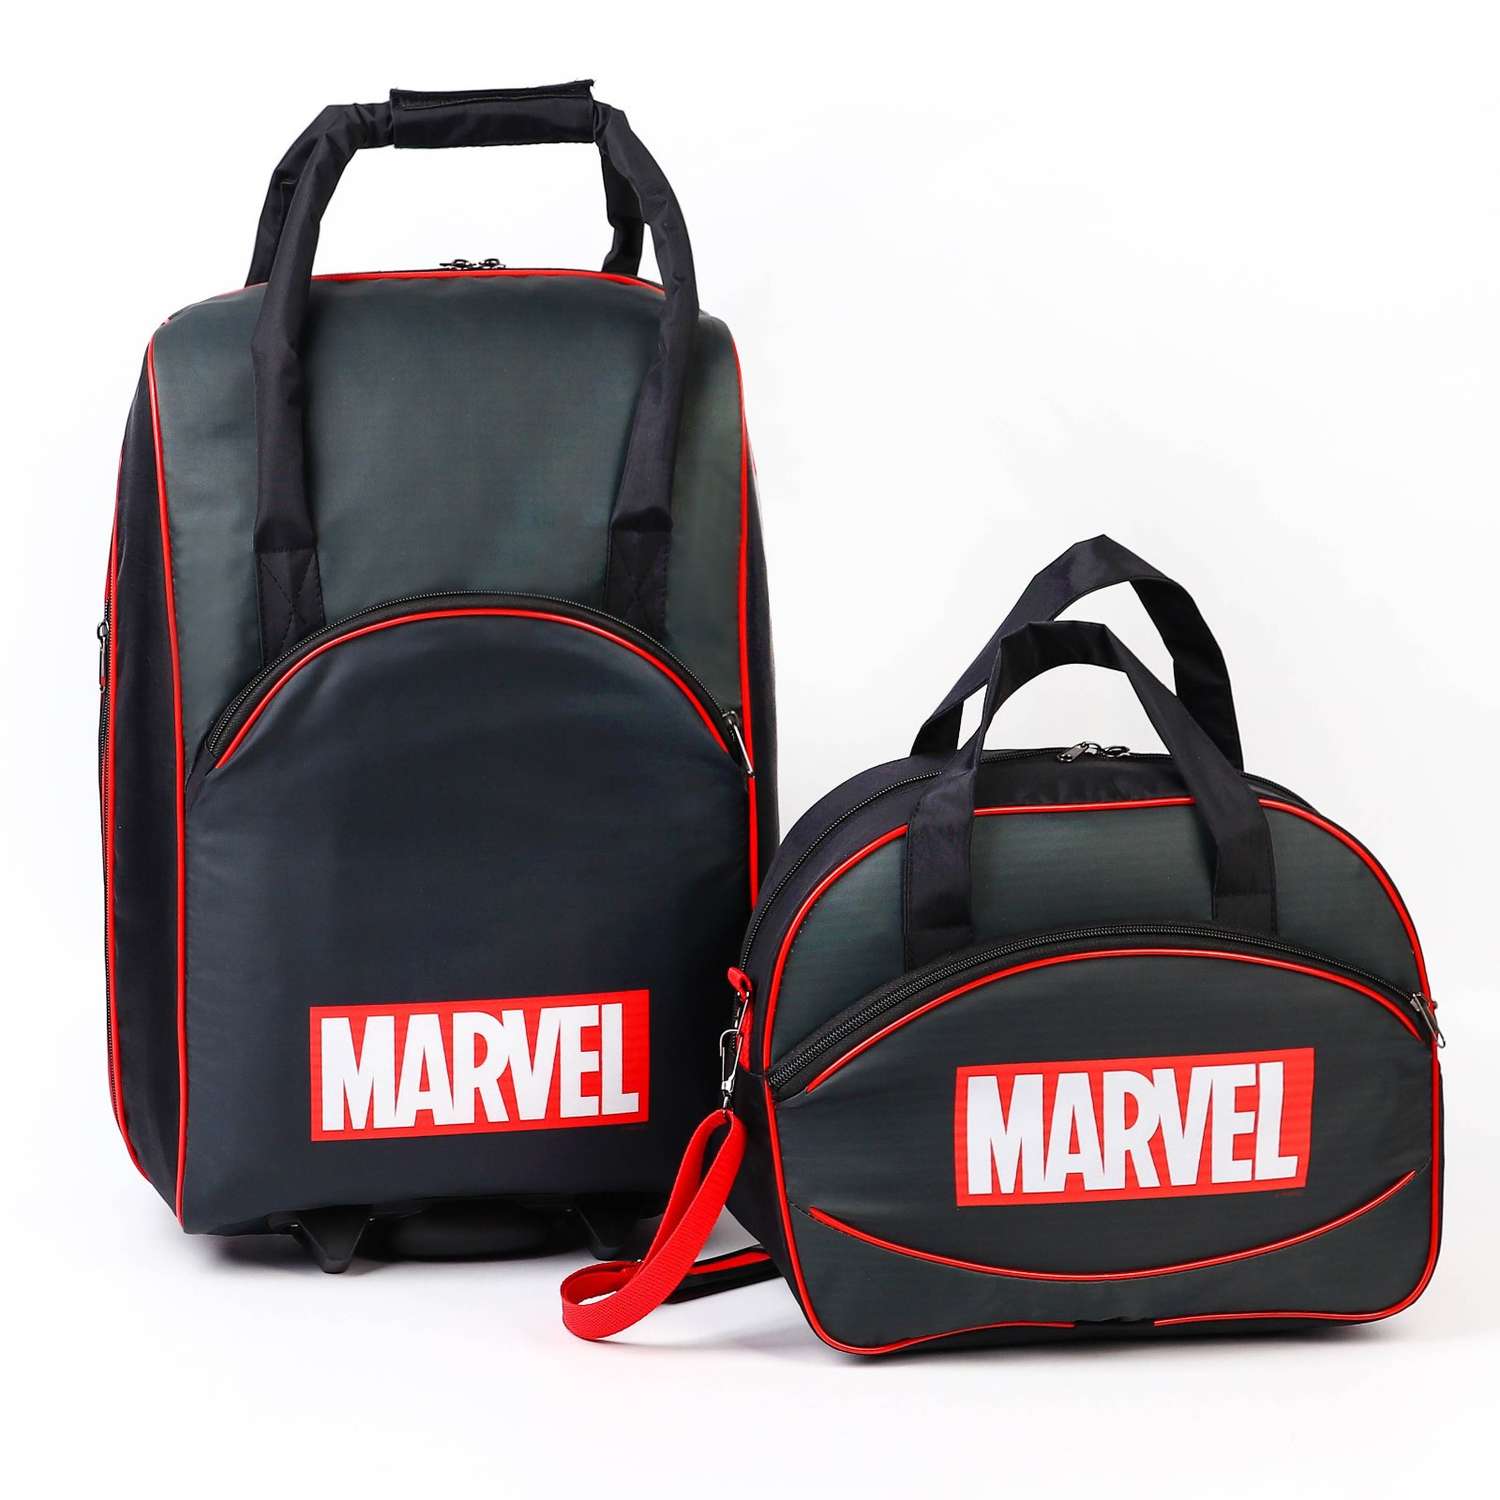 Чемодан Marvel с сумкой 52*21*34 см отдел на молнии н/карман 9728268 - фото 1